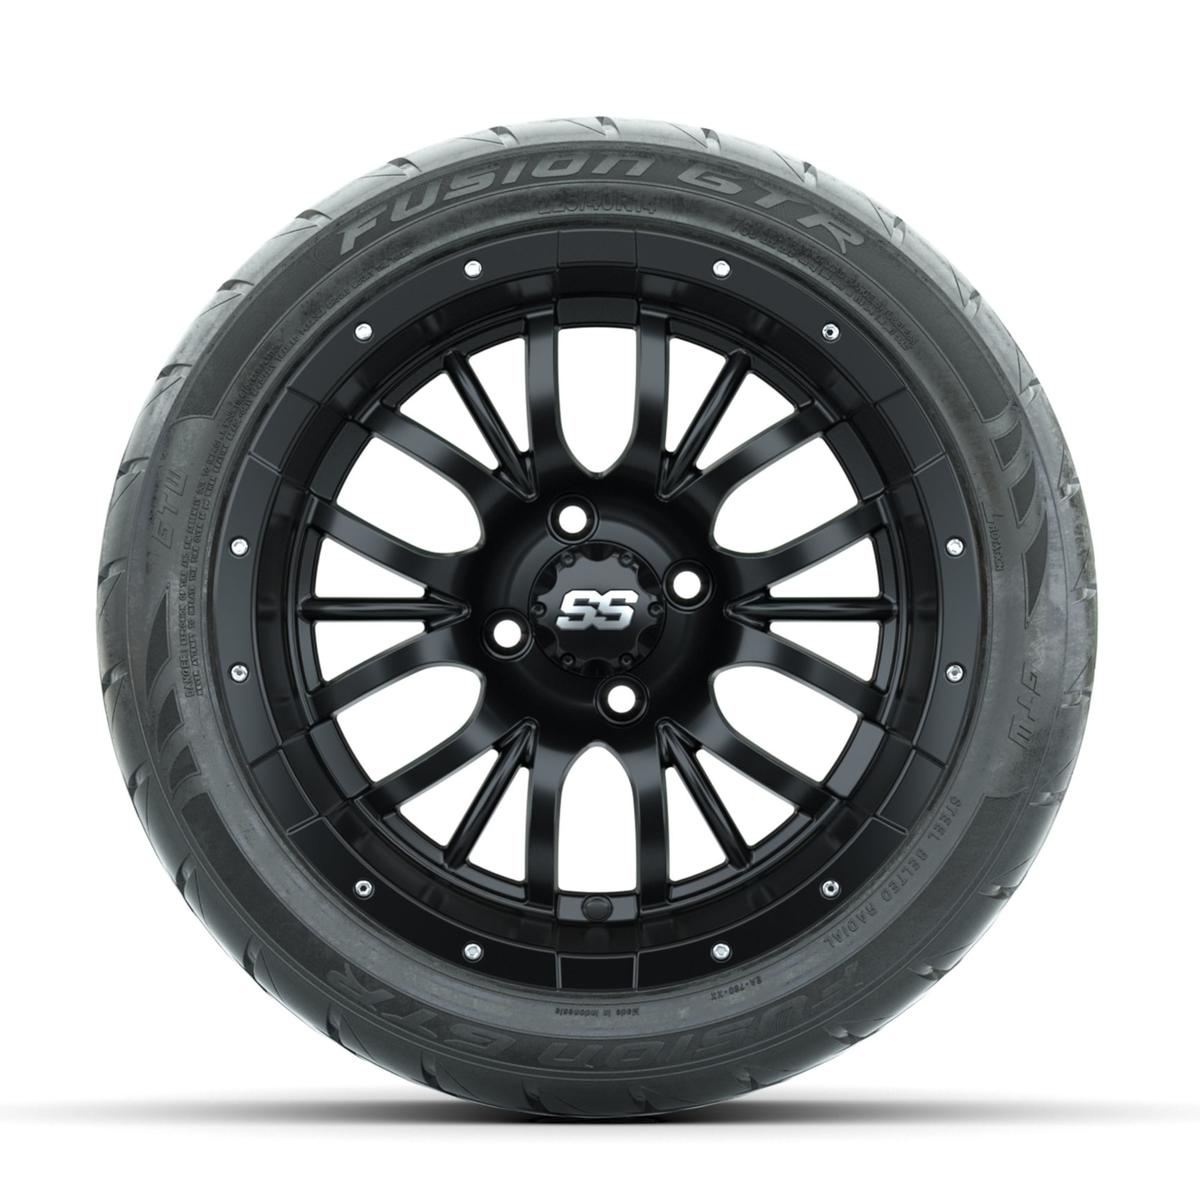 GTW Diesel Matte Black 14 in Wheels with 225/40-R14 Fusion GTR Street Tires – Full Set